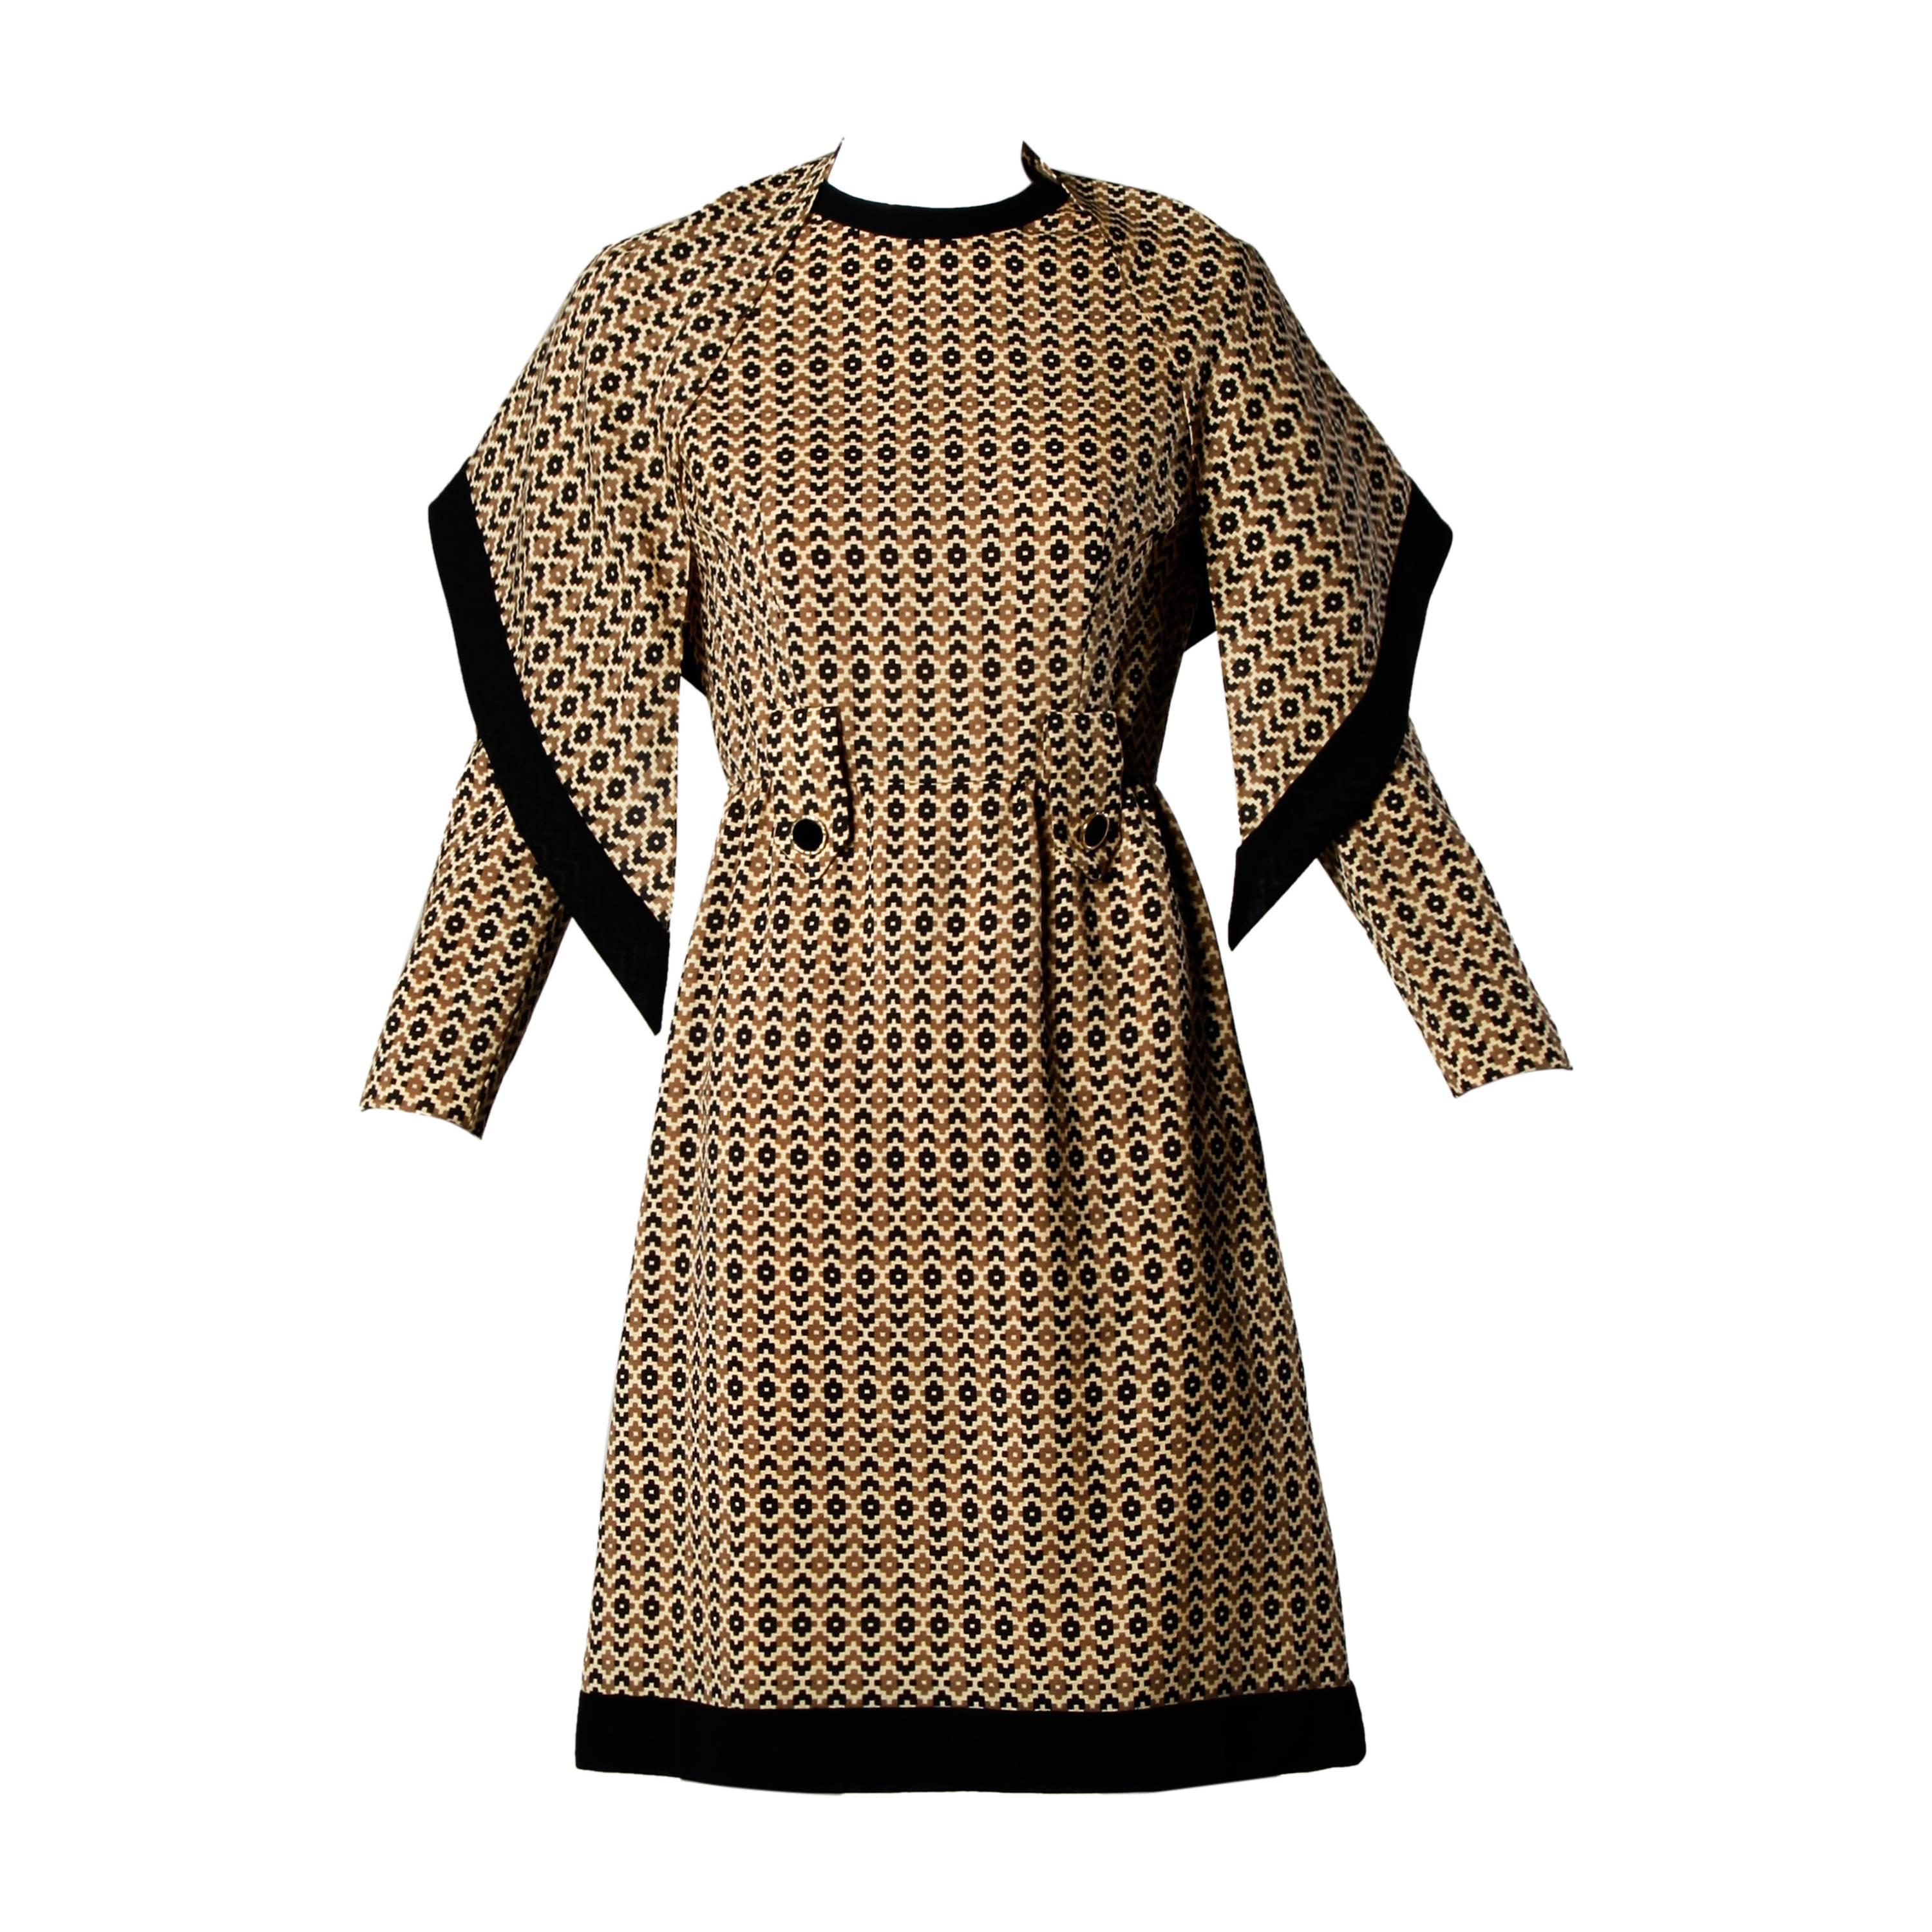 Adele Simpson Vintage 1960s Geometric Wool Dress + Scarf Set 2-Piece Ensemble For Sale